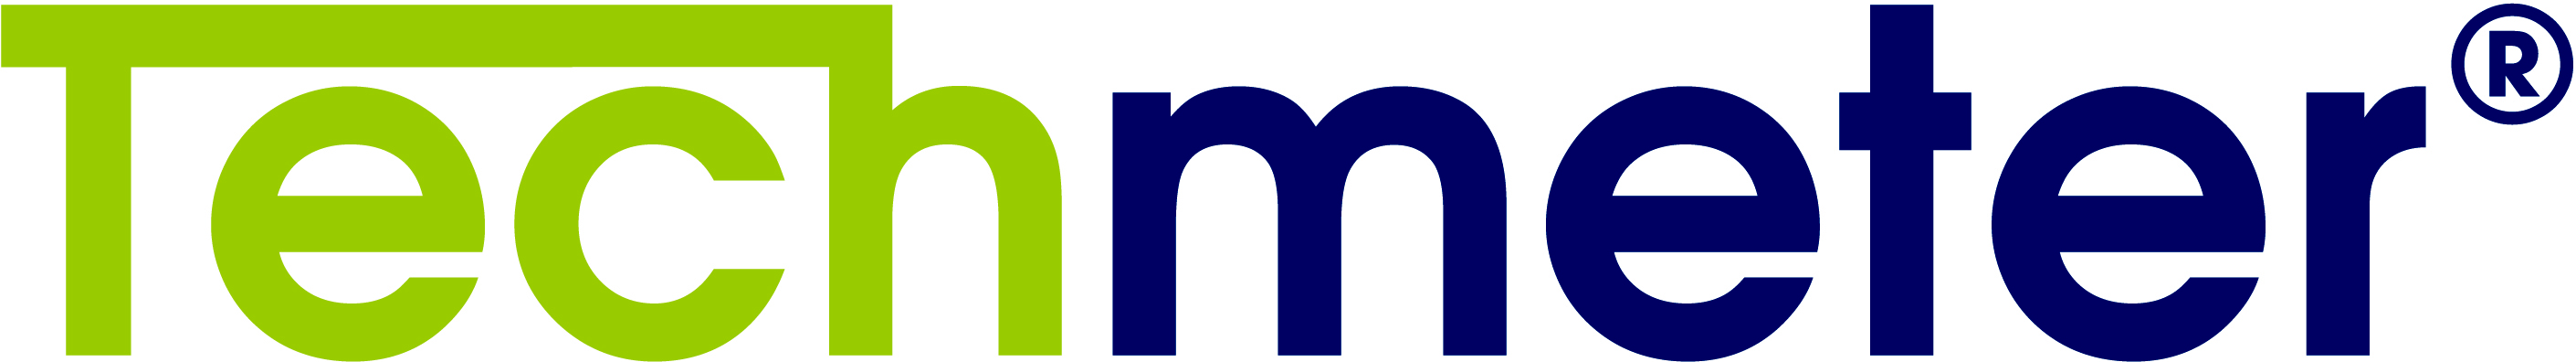 Techmeter logo